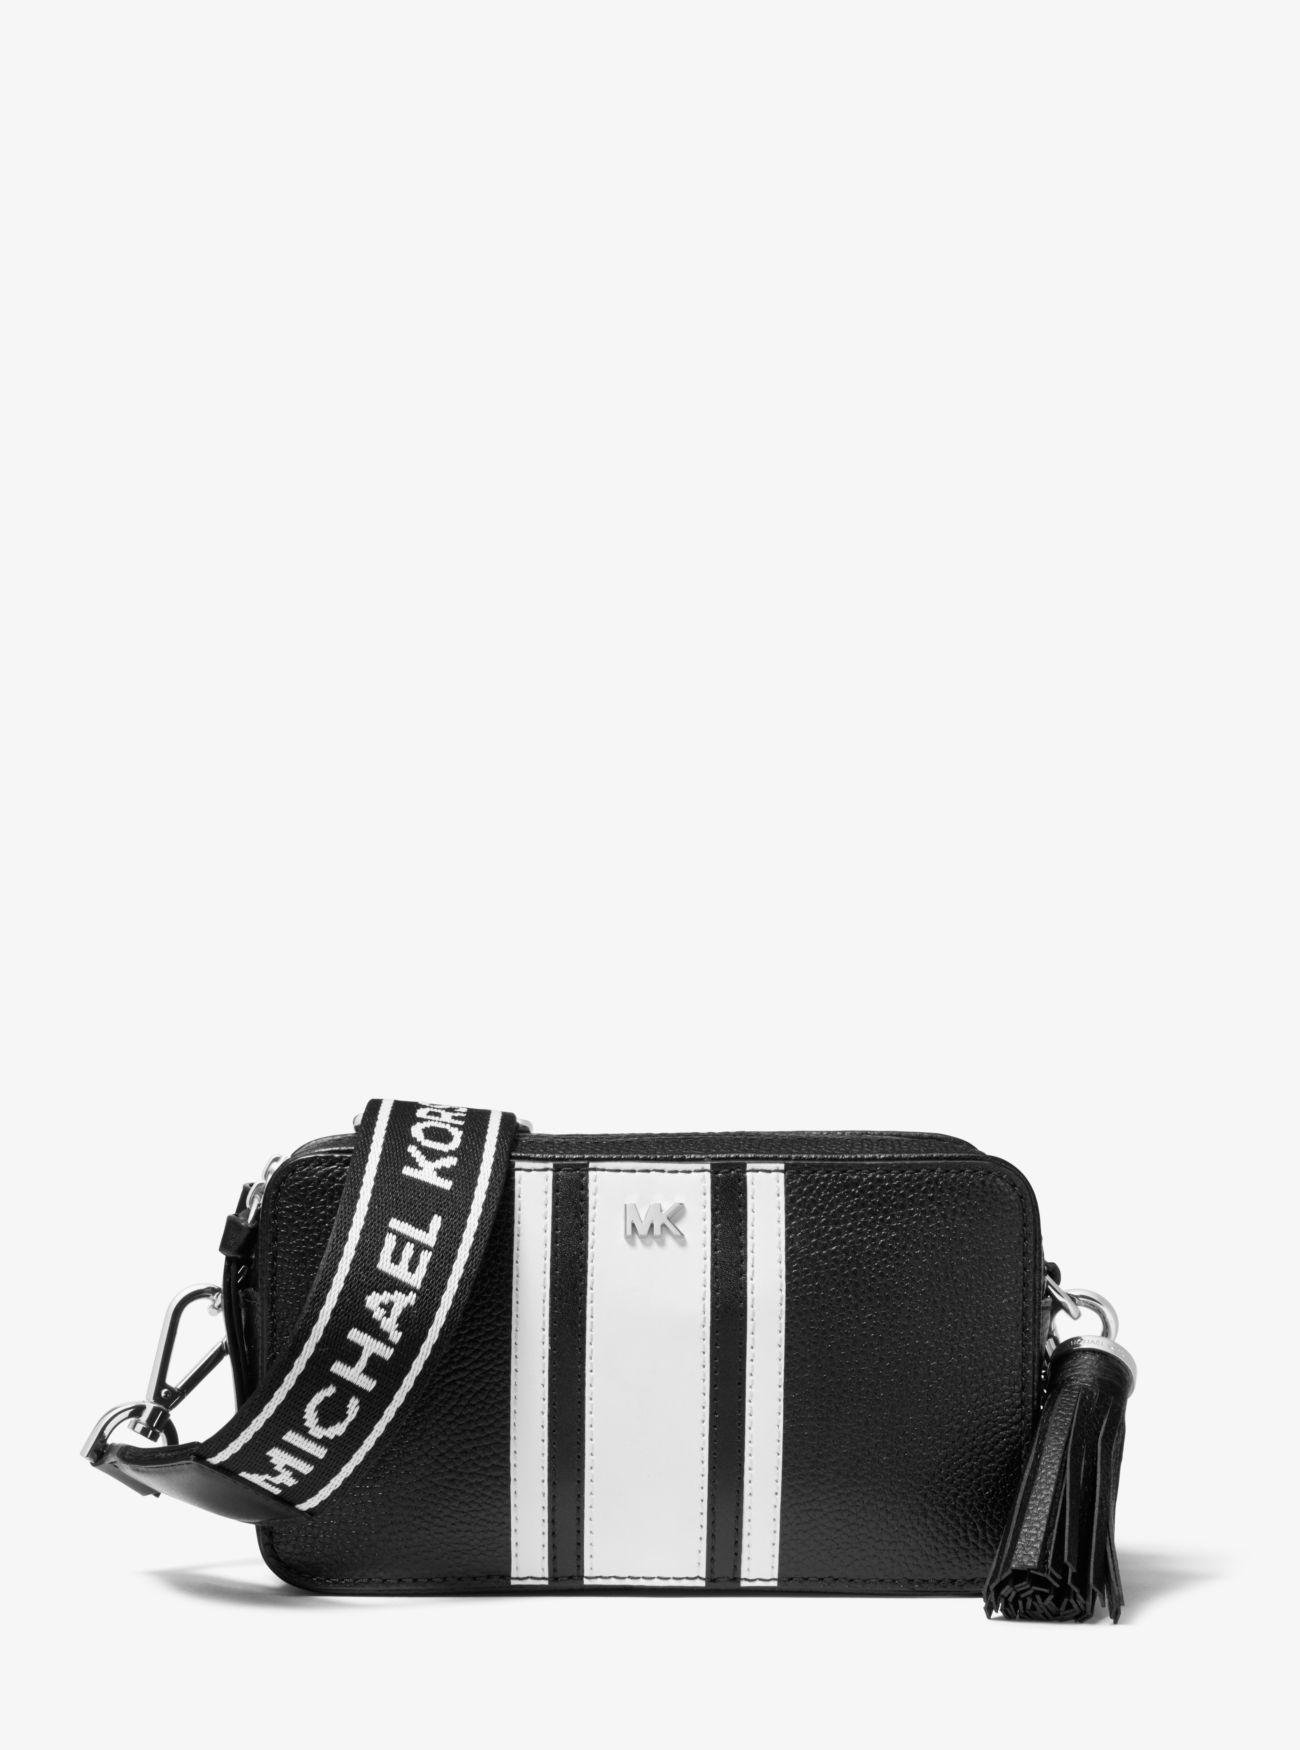 Michael Kors Small Camera Bag Black/optic White | Lyst